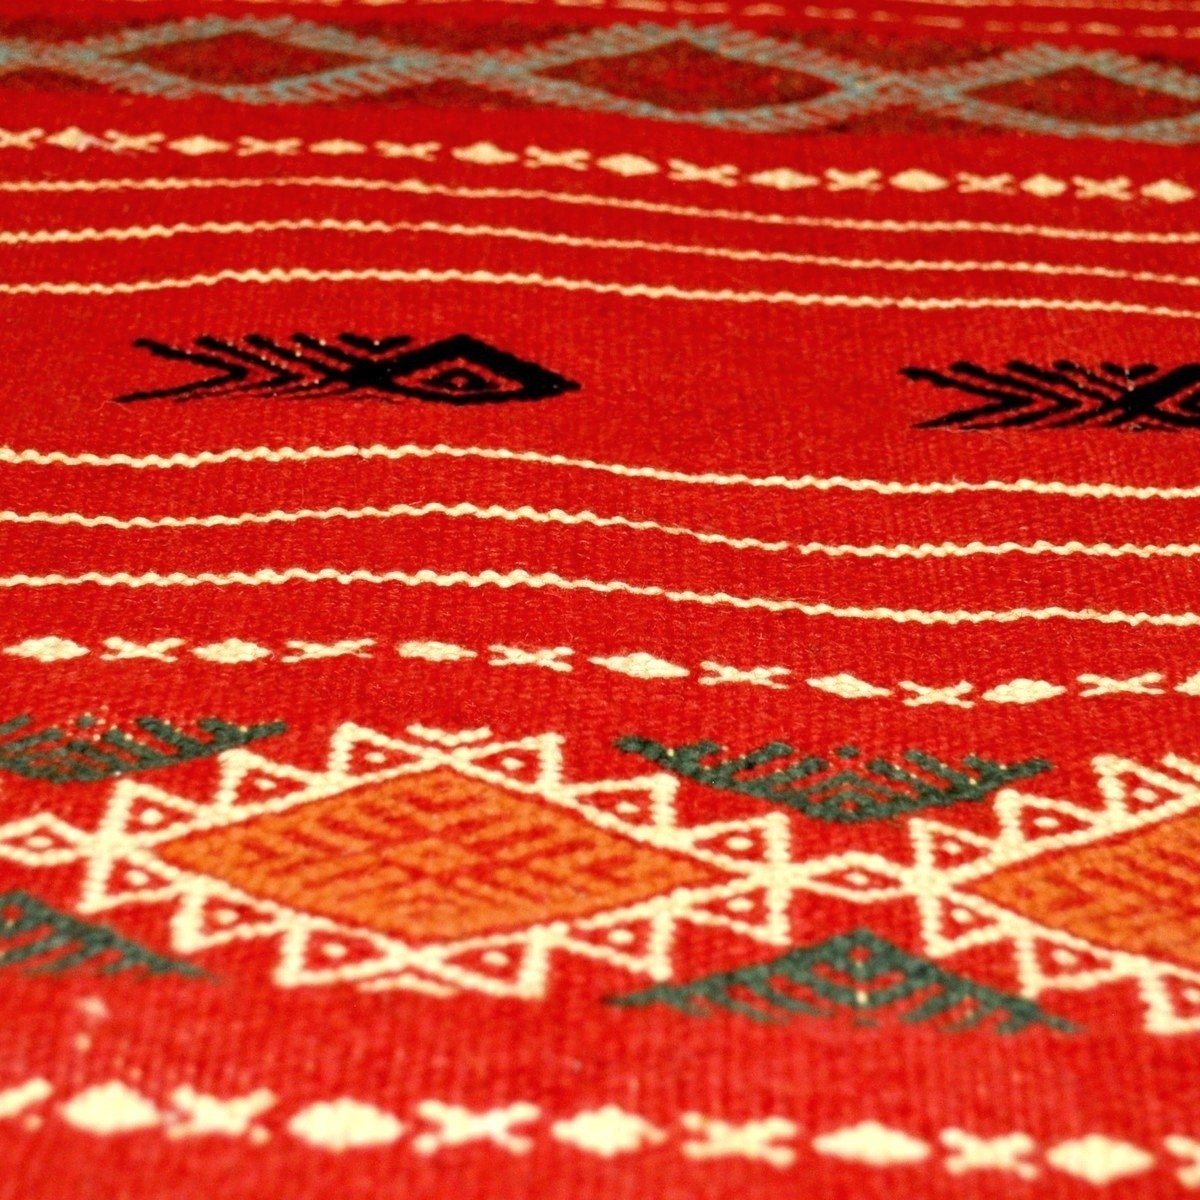 Berber tapijt Tapijt Kilim lang Mellassine 60x200 Rood (Handgeweven, Wol, Tunesië) Tunesisch kilimdeken, Marokkaanse stijl. Rech